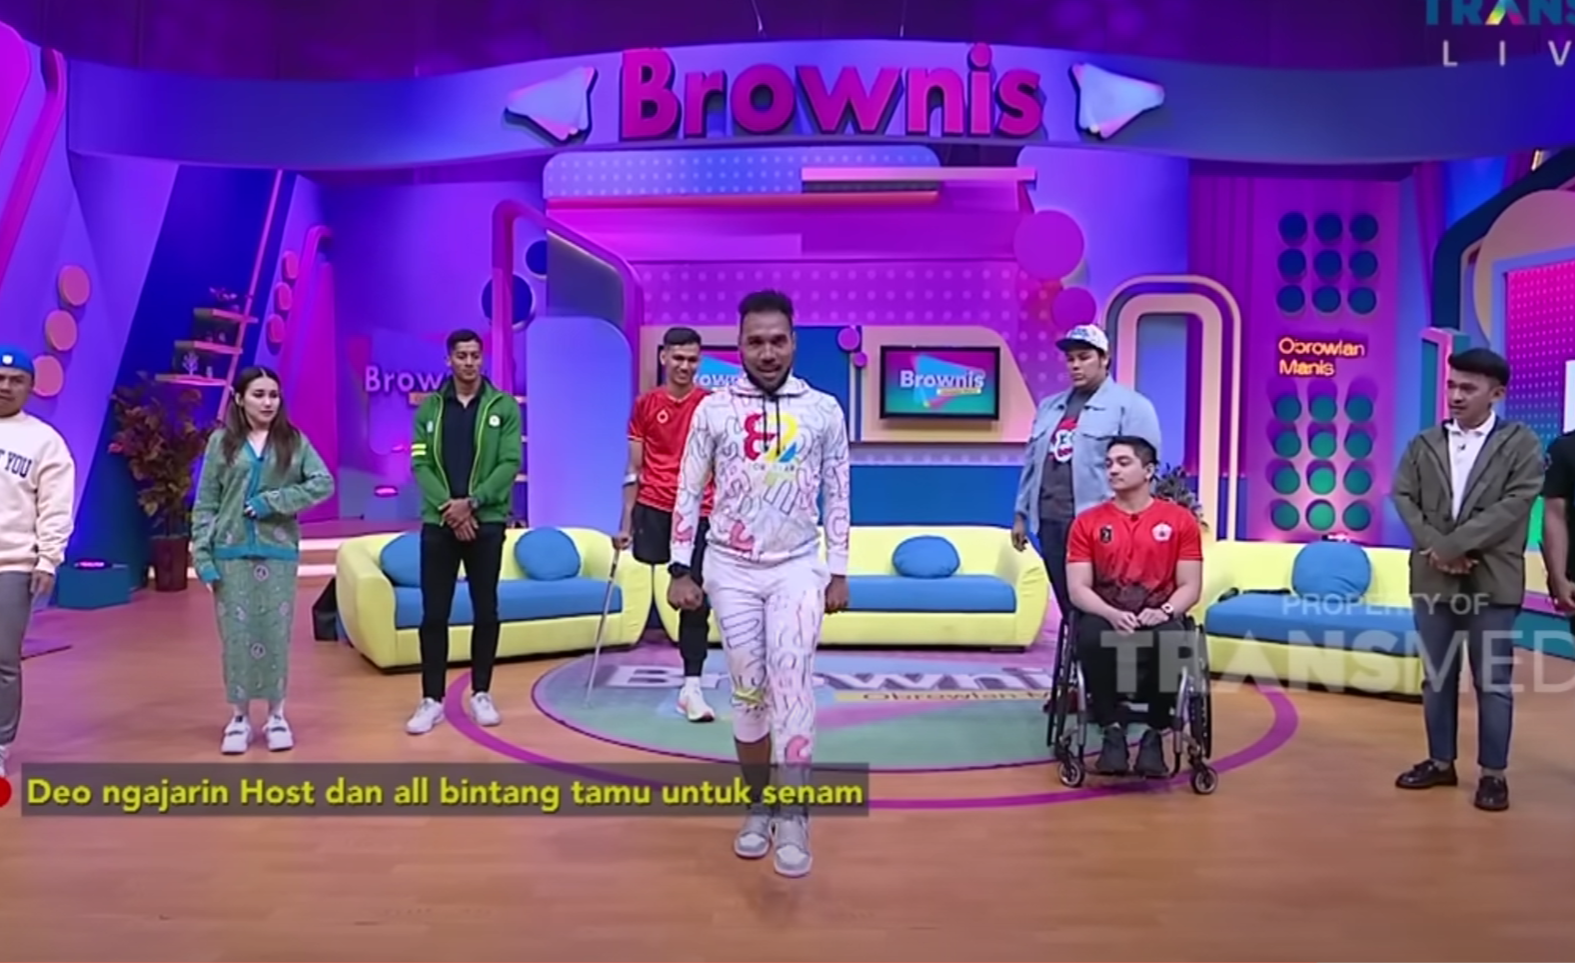 Brownies TV Kena Hujat Netizen Usai Ajak Atlet Difabel Senam